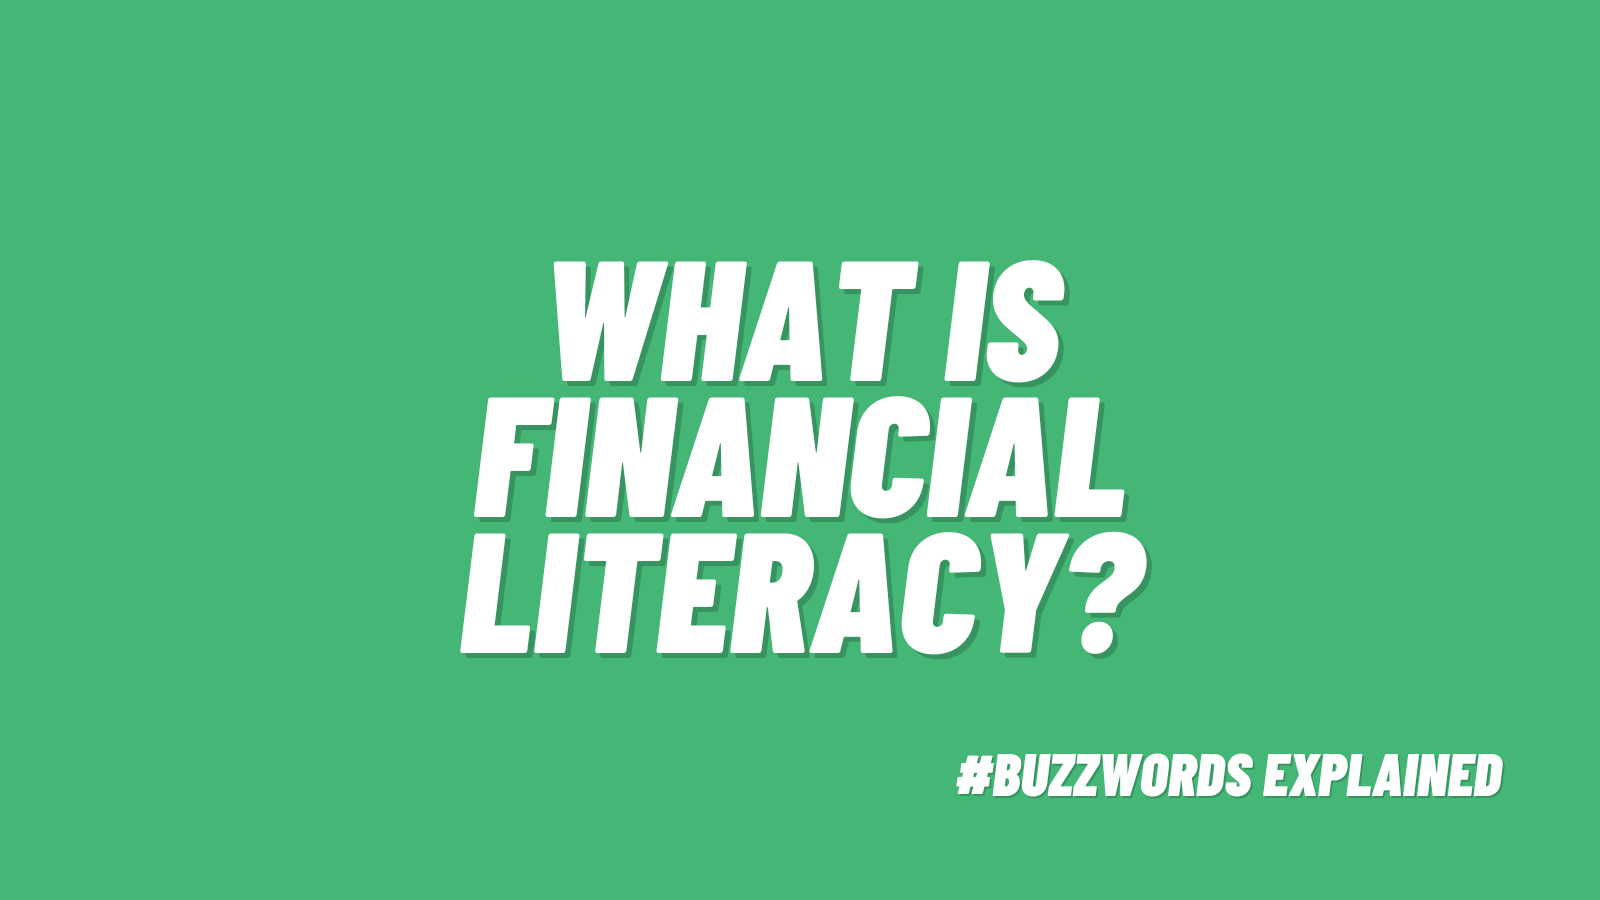 What is Financial Literacy? #buzzwordsexplained